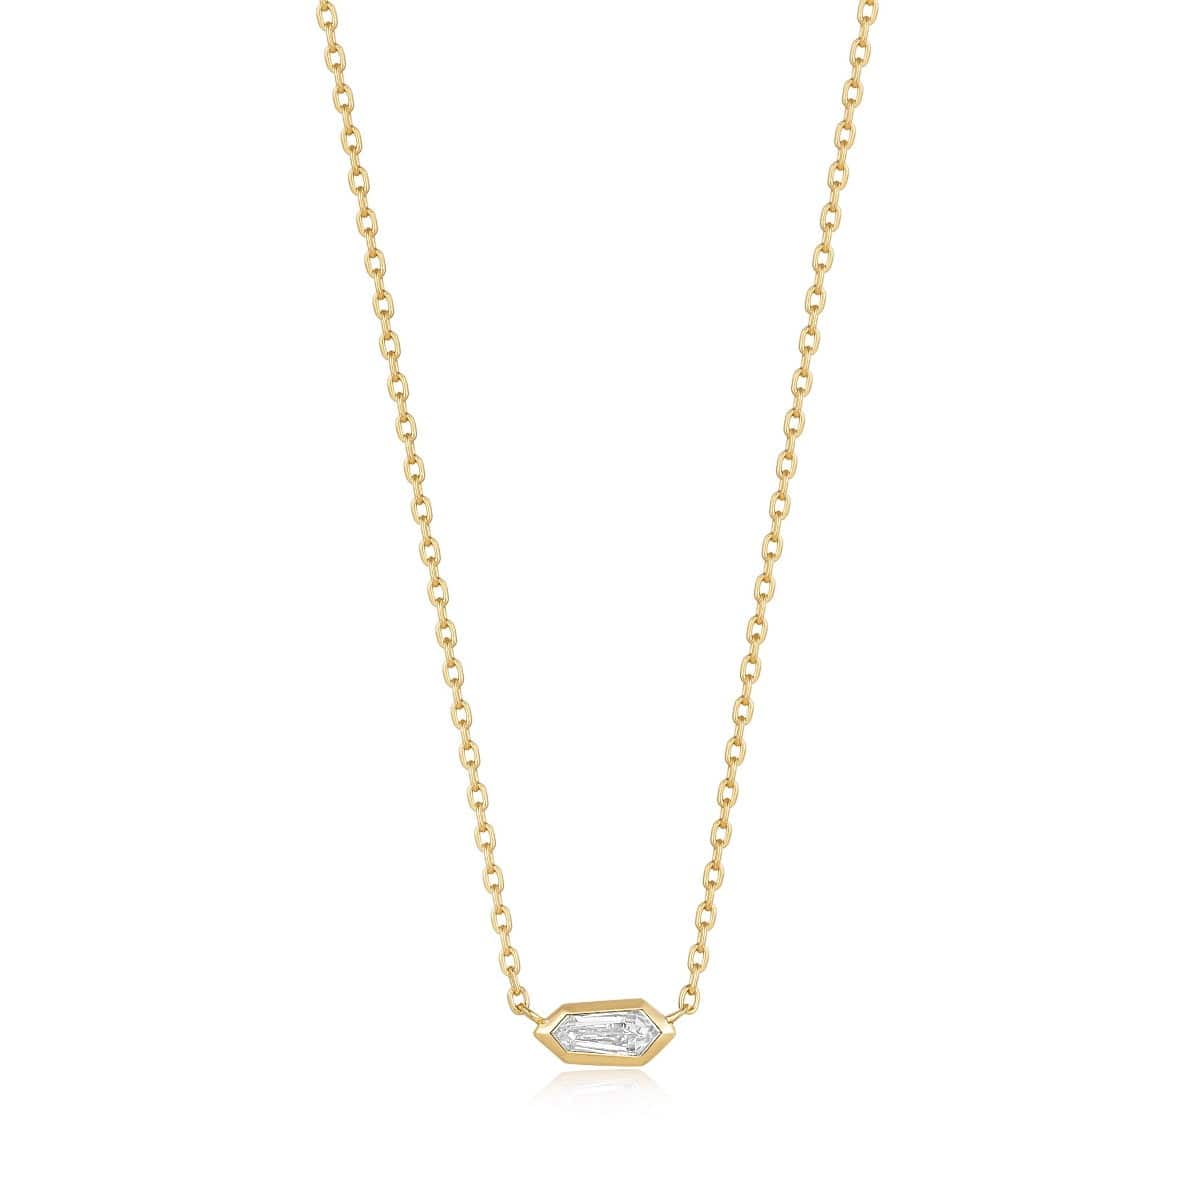 NKL-GPL Gold Sparkle Emblem Chain Necklace